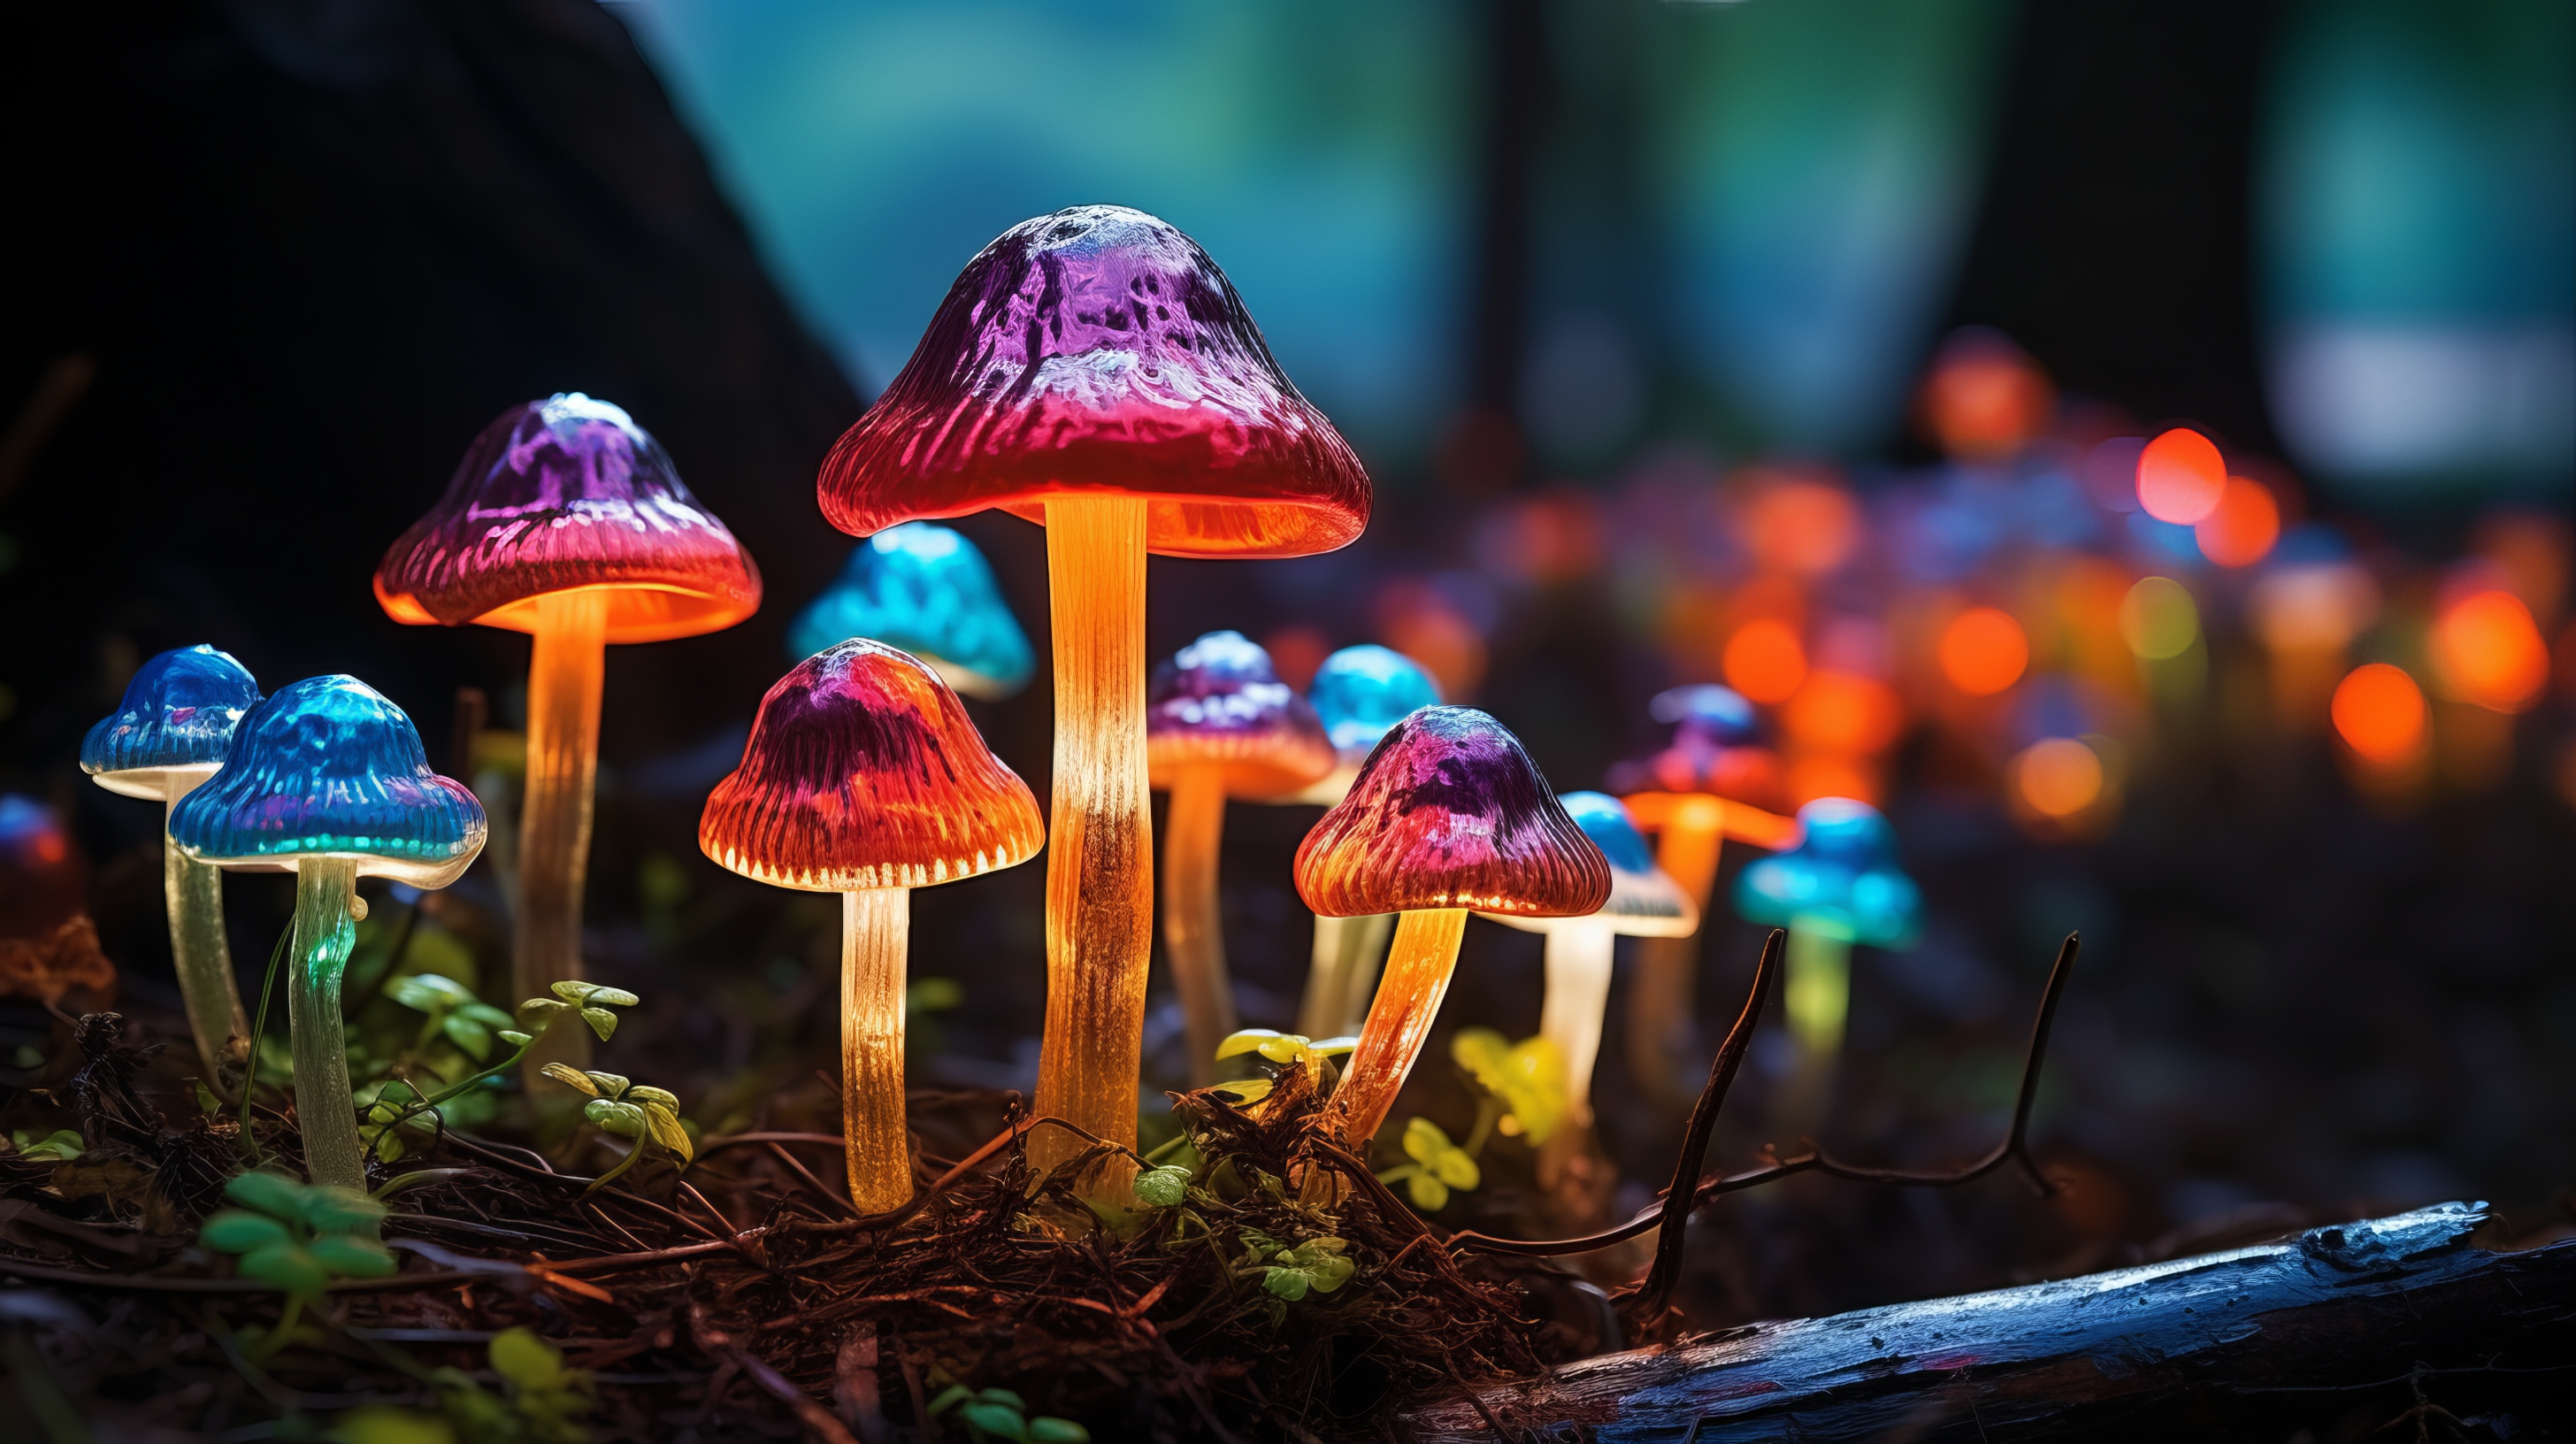 General 2912x1632 AI art mushroom glowing bokeh blurred blurry background digital art nature closeup